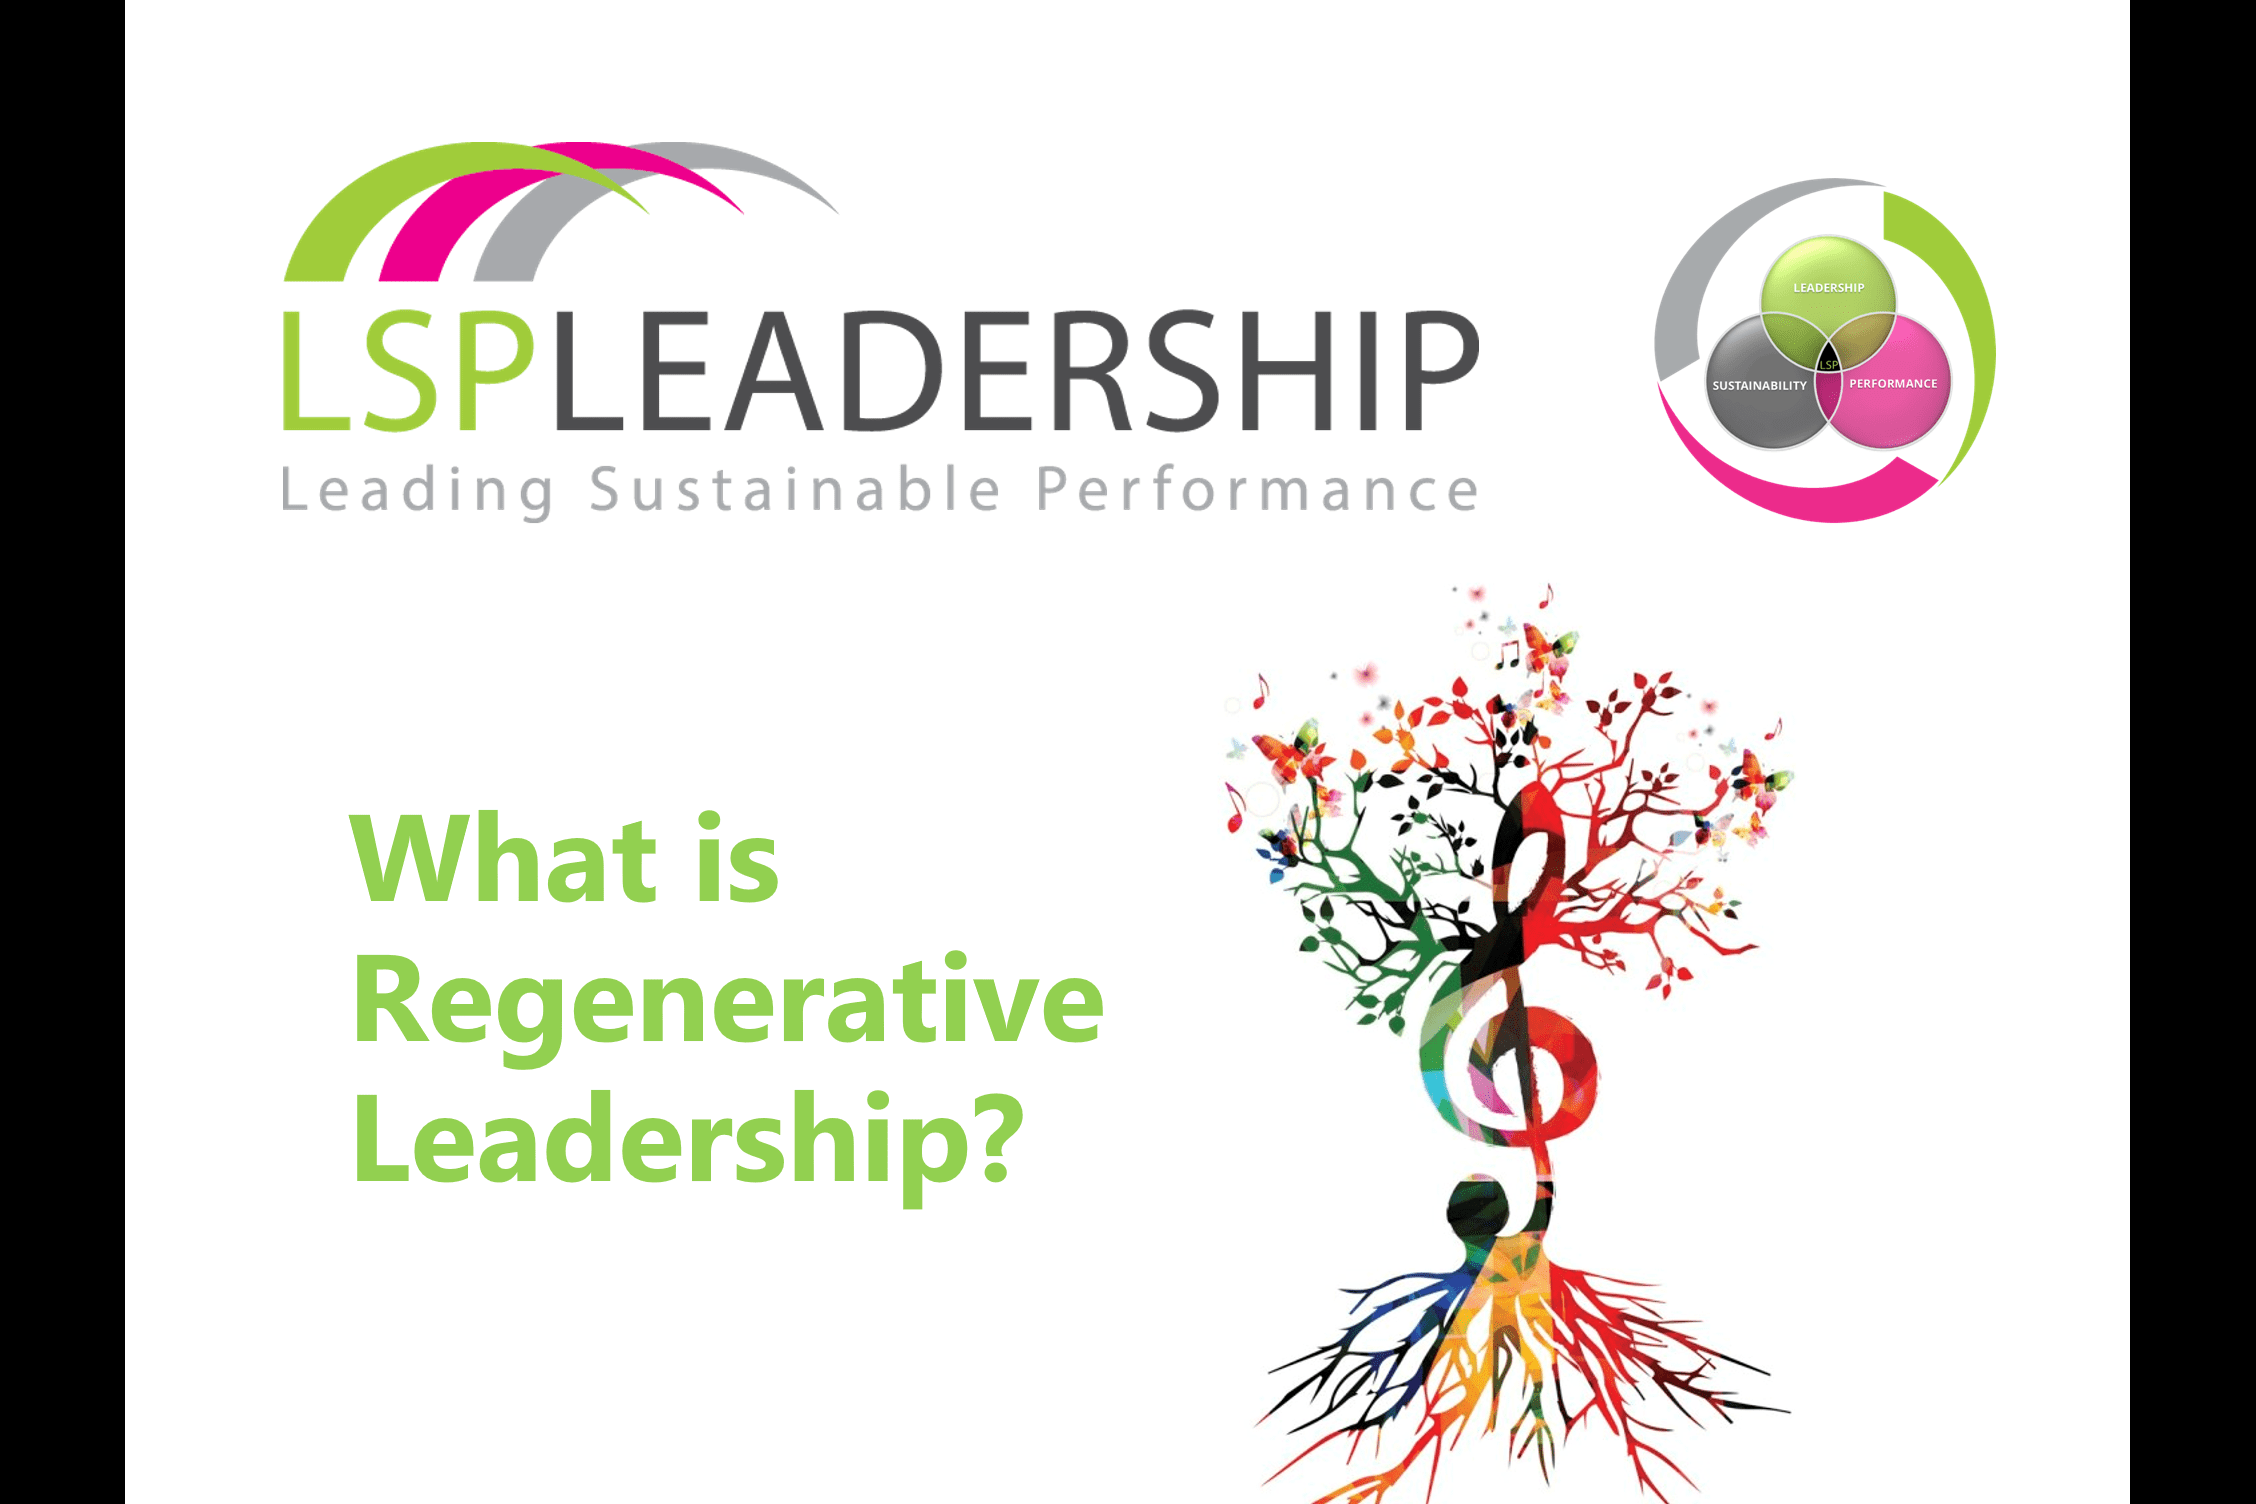 What is Regenerative Leadership?